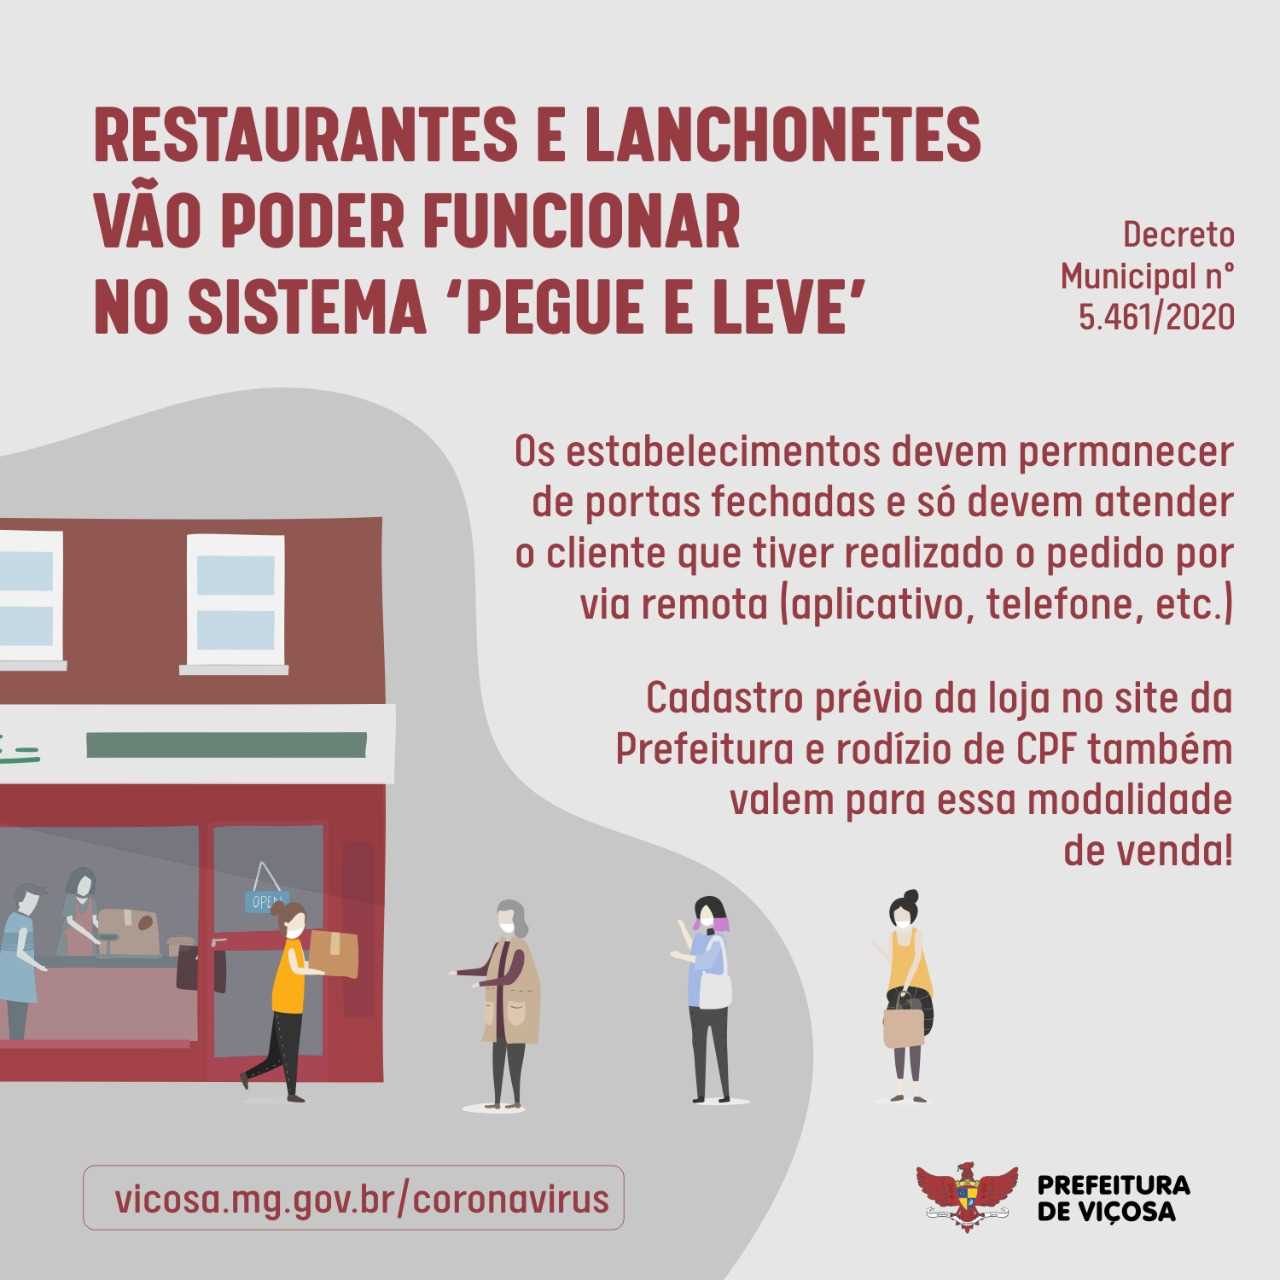 Decreto autoriza lanchonetes e restaurantes de Viçosa a funcionarem em sistema de retirada